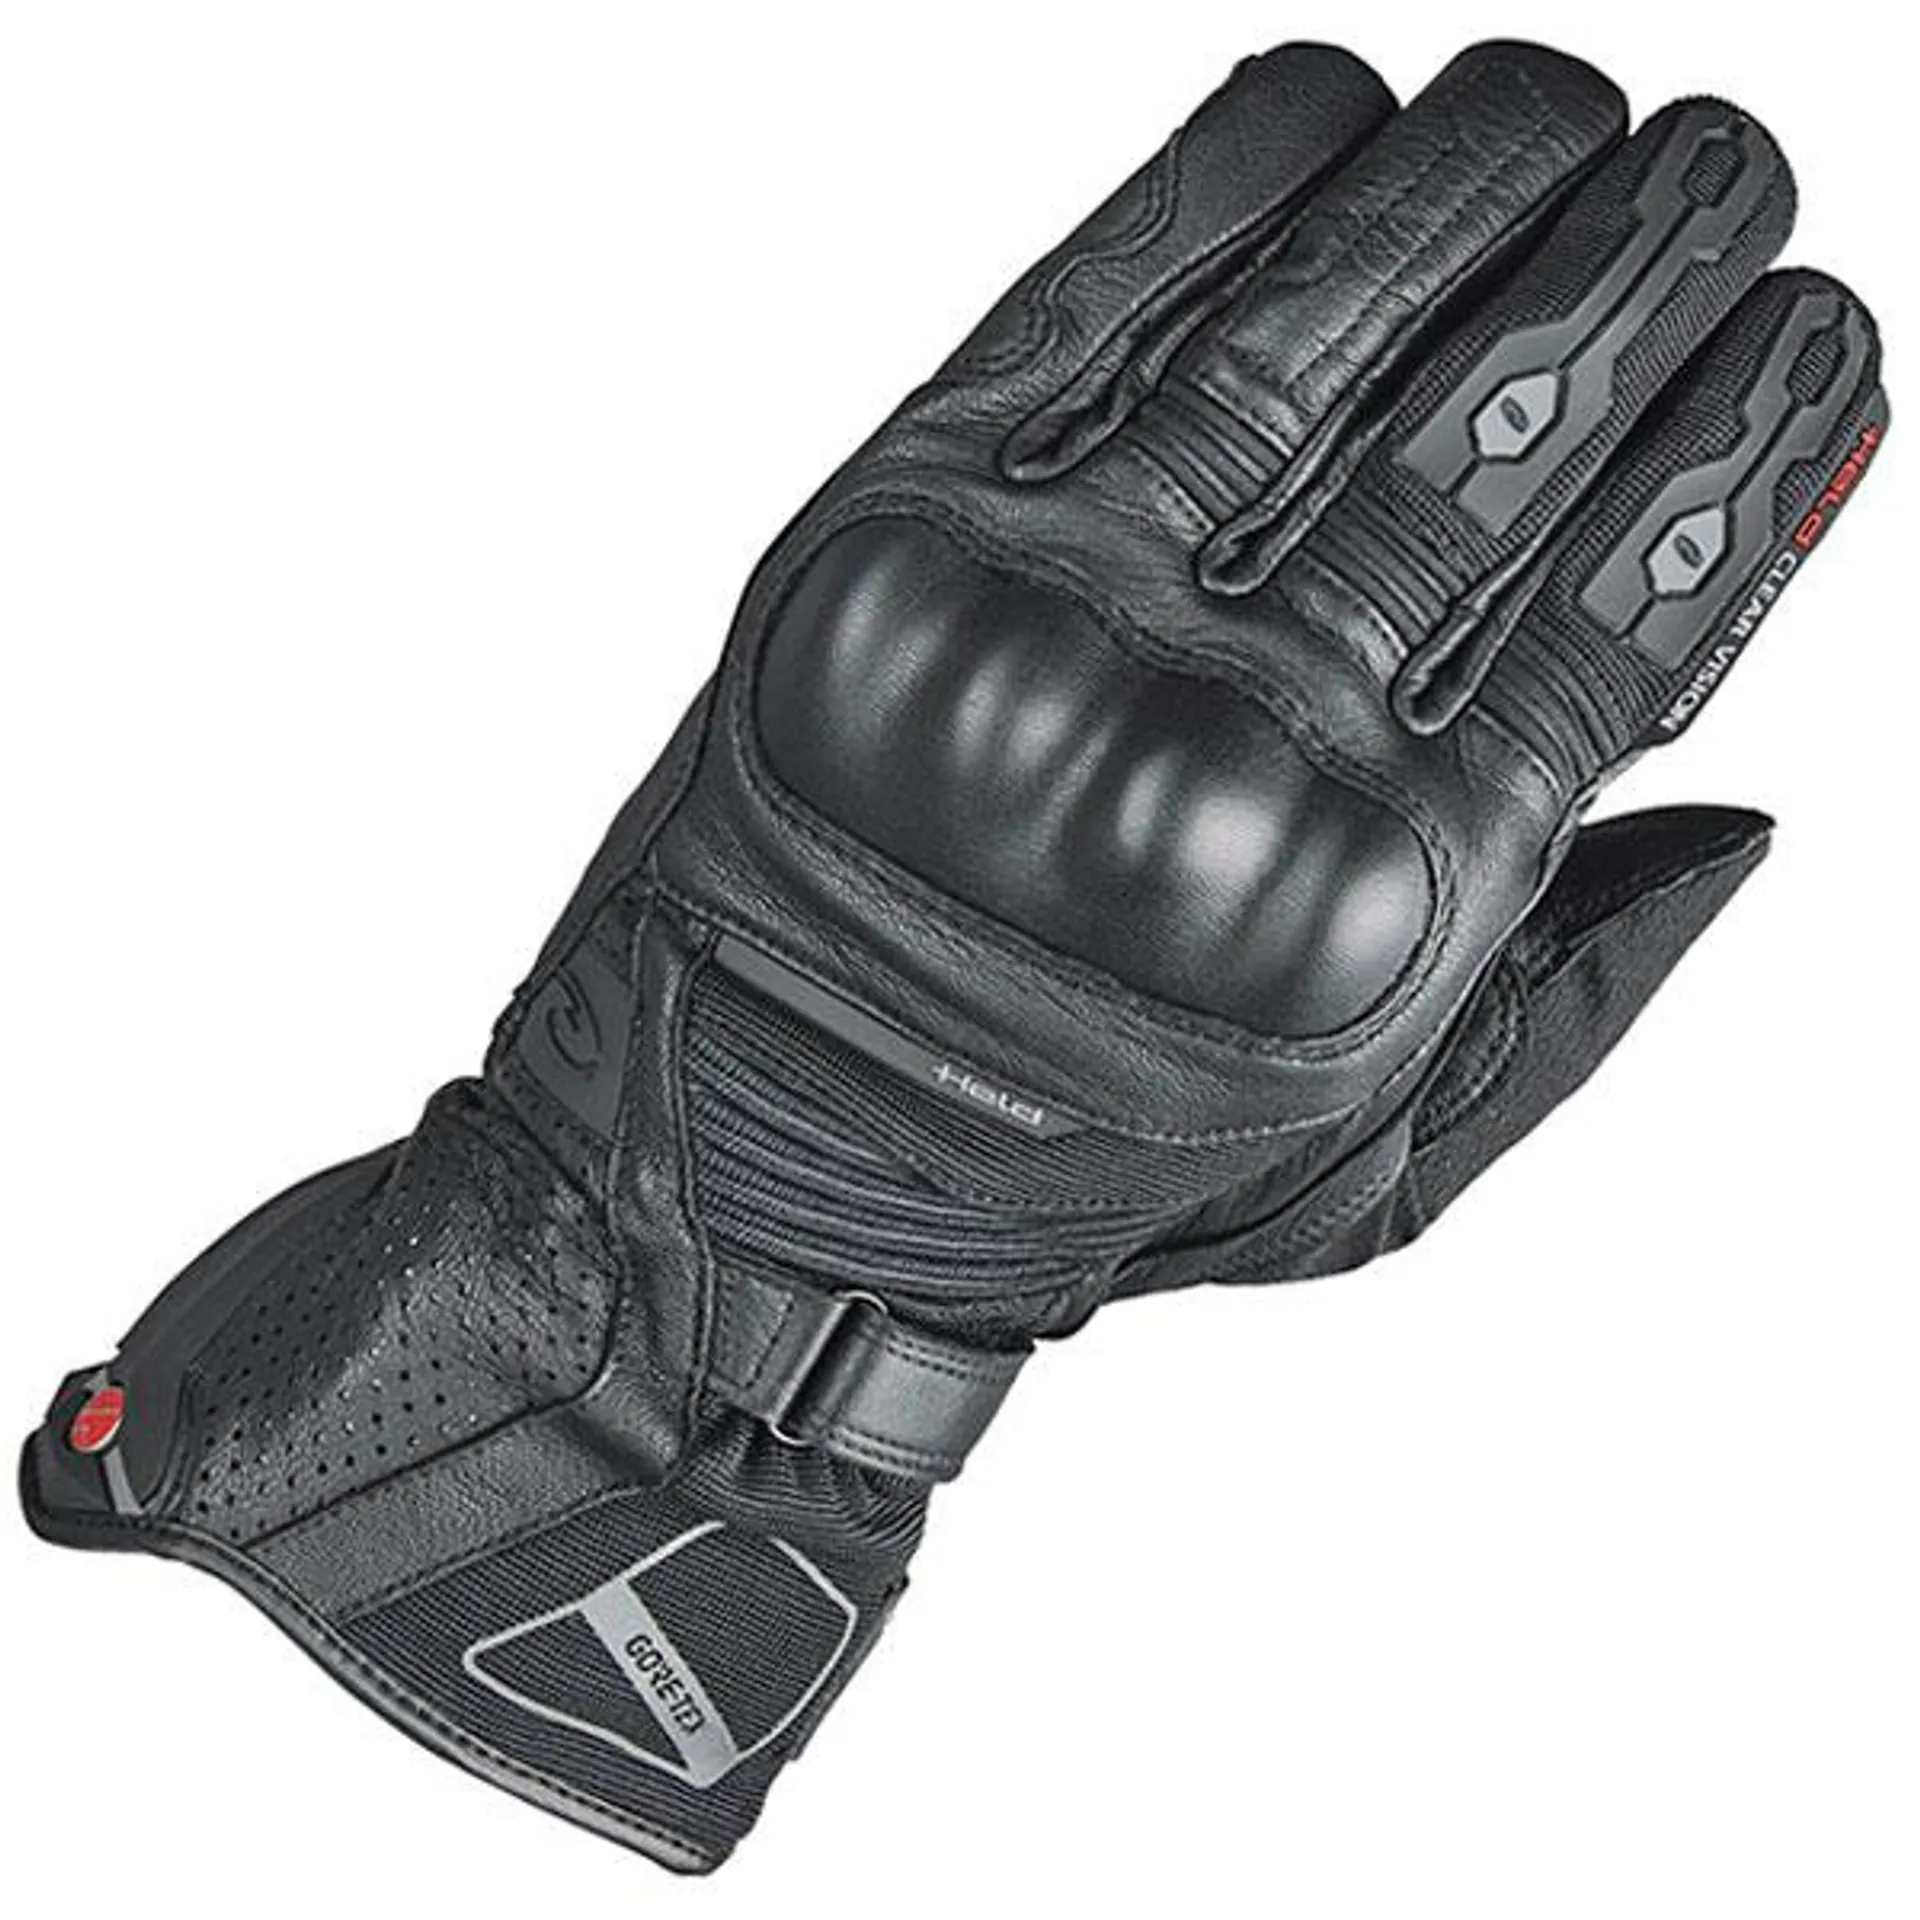 Held Score 4.0 Leather & Textile Gloves - Black